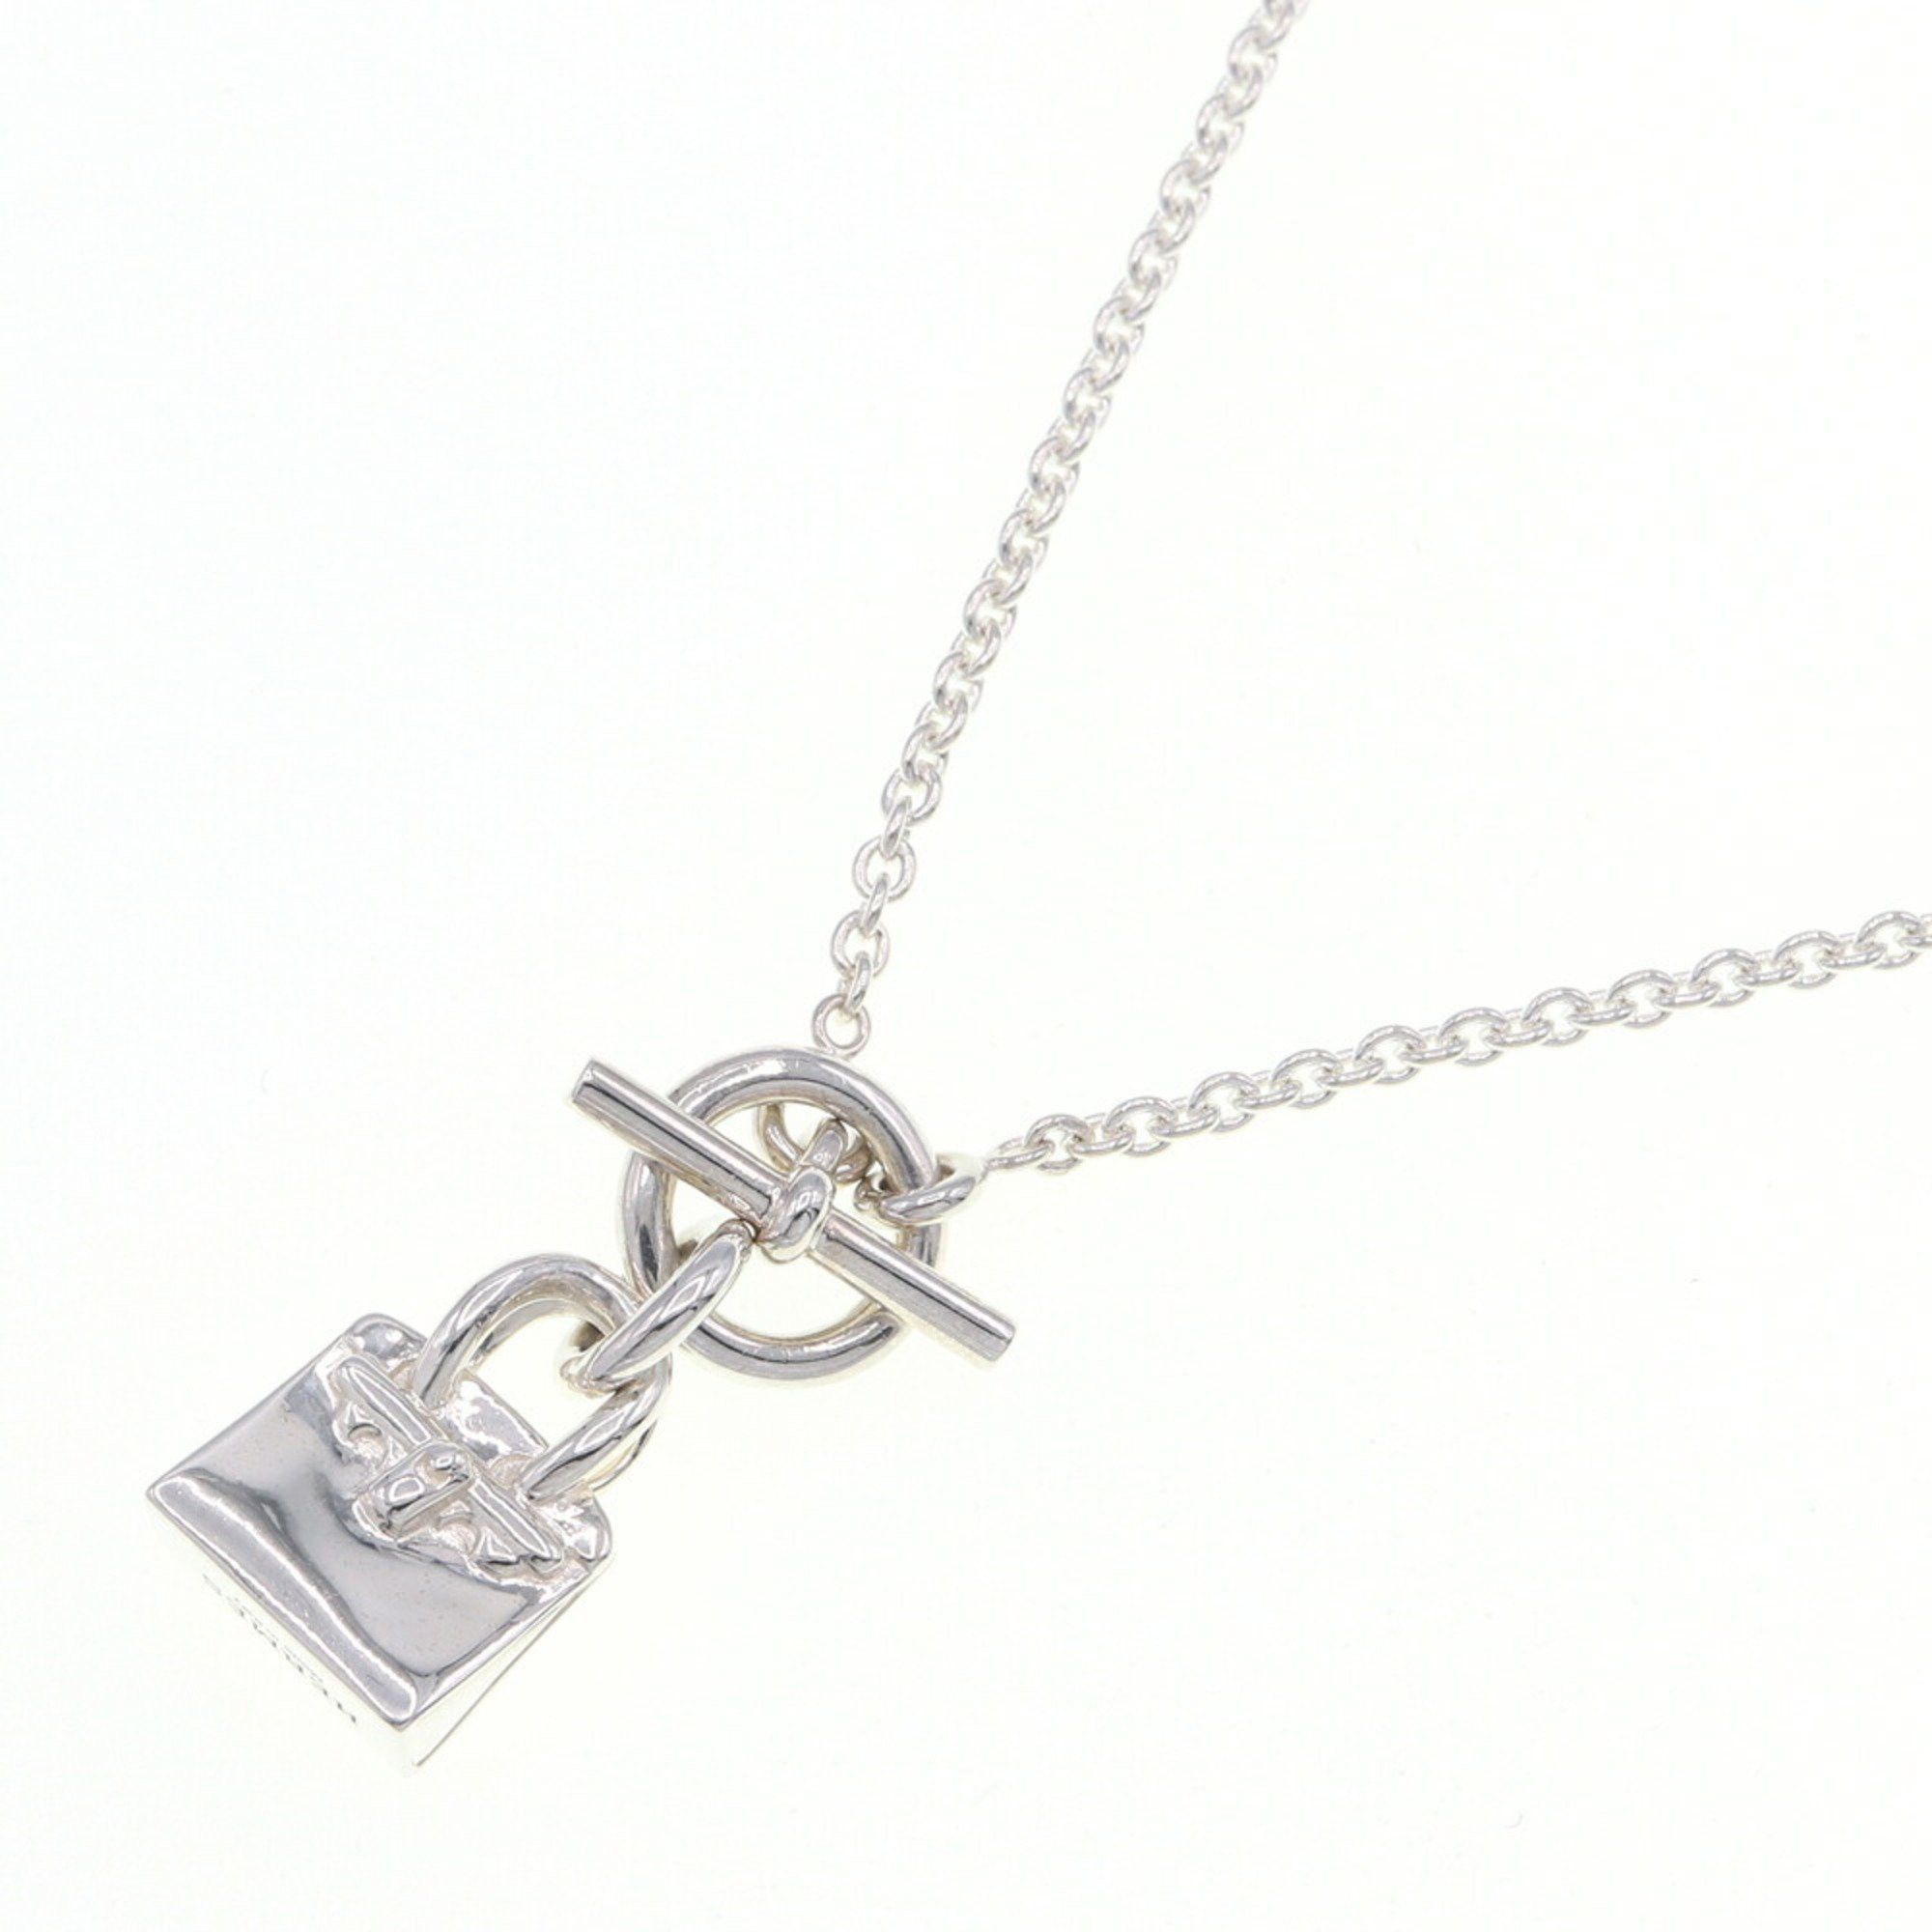 image of Hermes Necklace Amulet Birkin Pendant Sv Sterling Silver 925 Choker Bag Motif Chain Women's Hermes